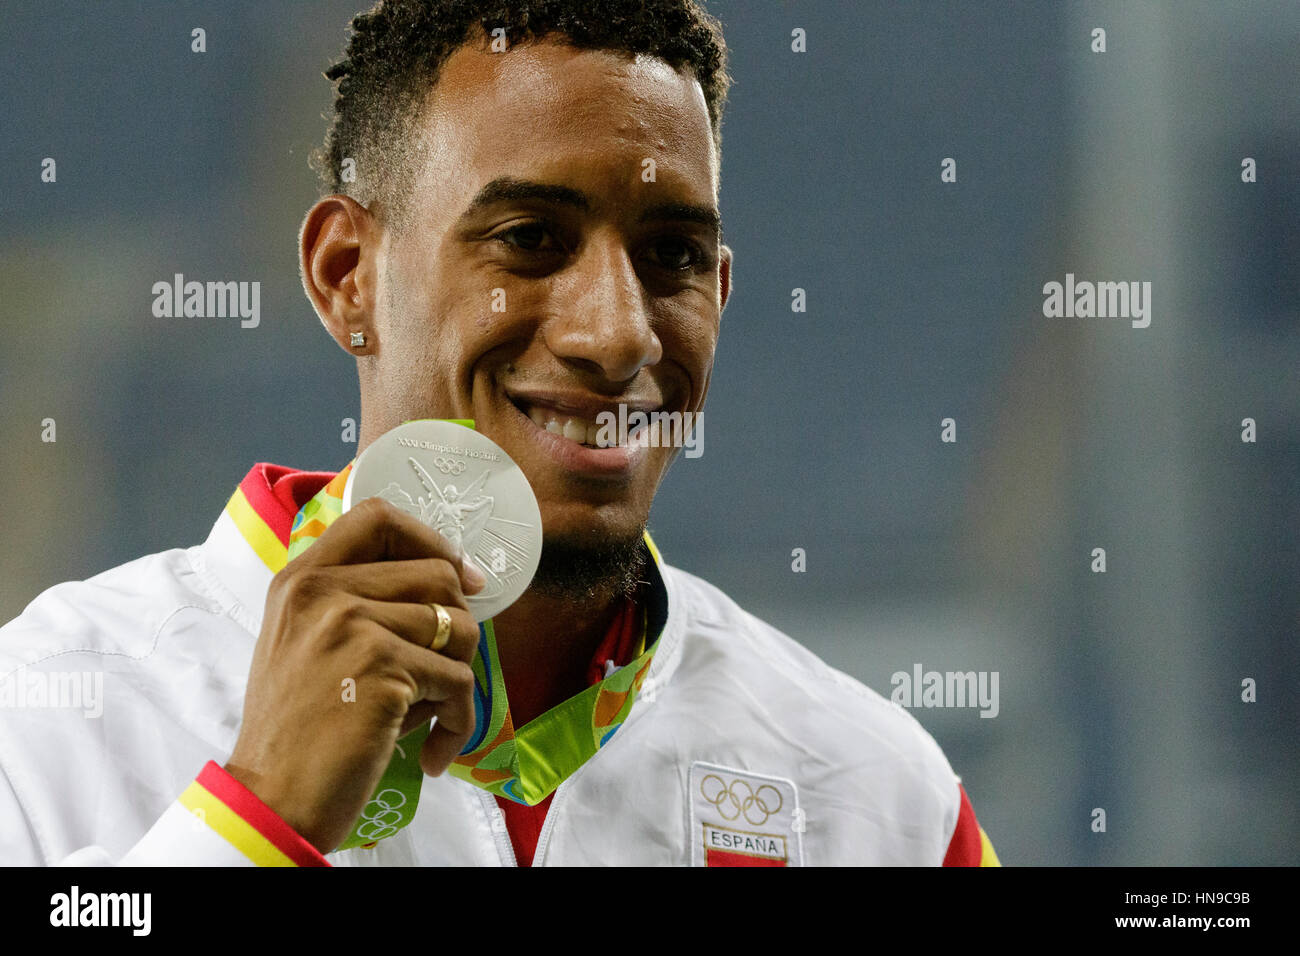 Rio de Janeiro, Brazil. 17 August 2016. Orlando Ortega (ESP) silver medal winner in the Men's 110m Hurdles at the 2016 Olympics Stock Photo